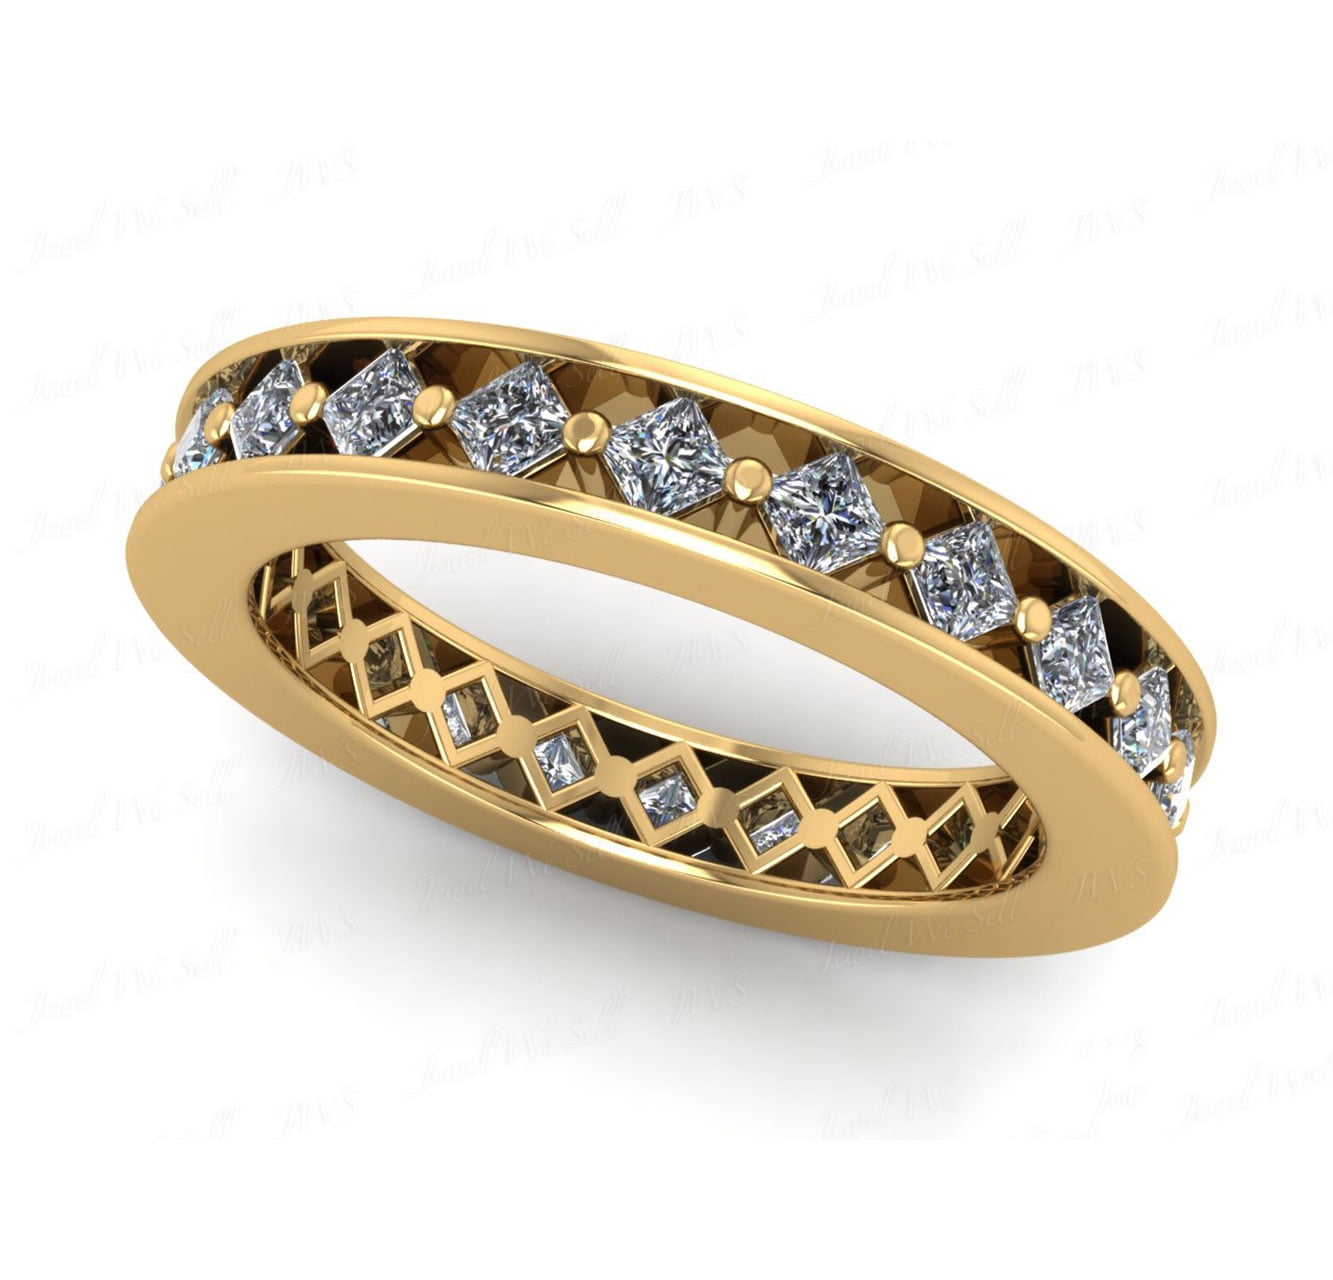 14K Yellow Gold Over 1.50Ct Blue Sapphire Cut Diamond Eternity Band Wedding Ring